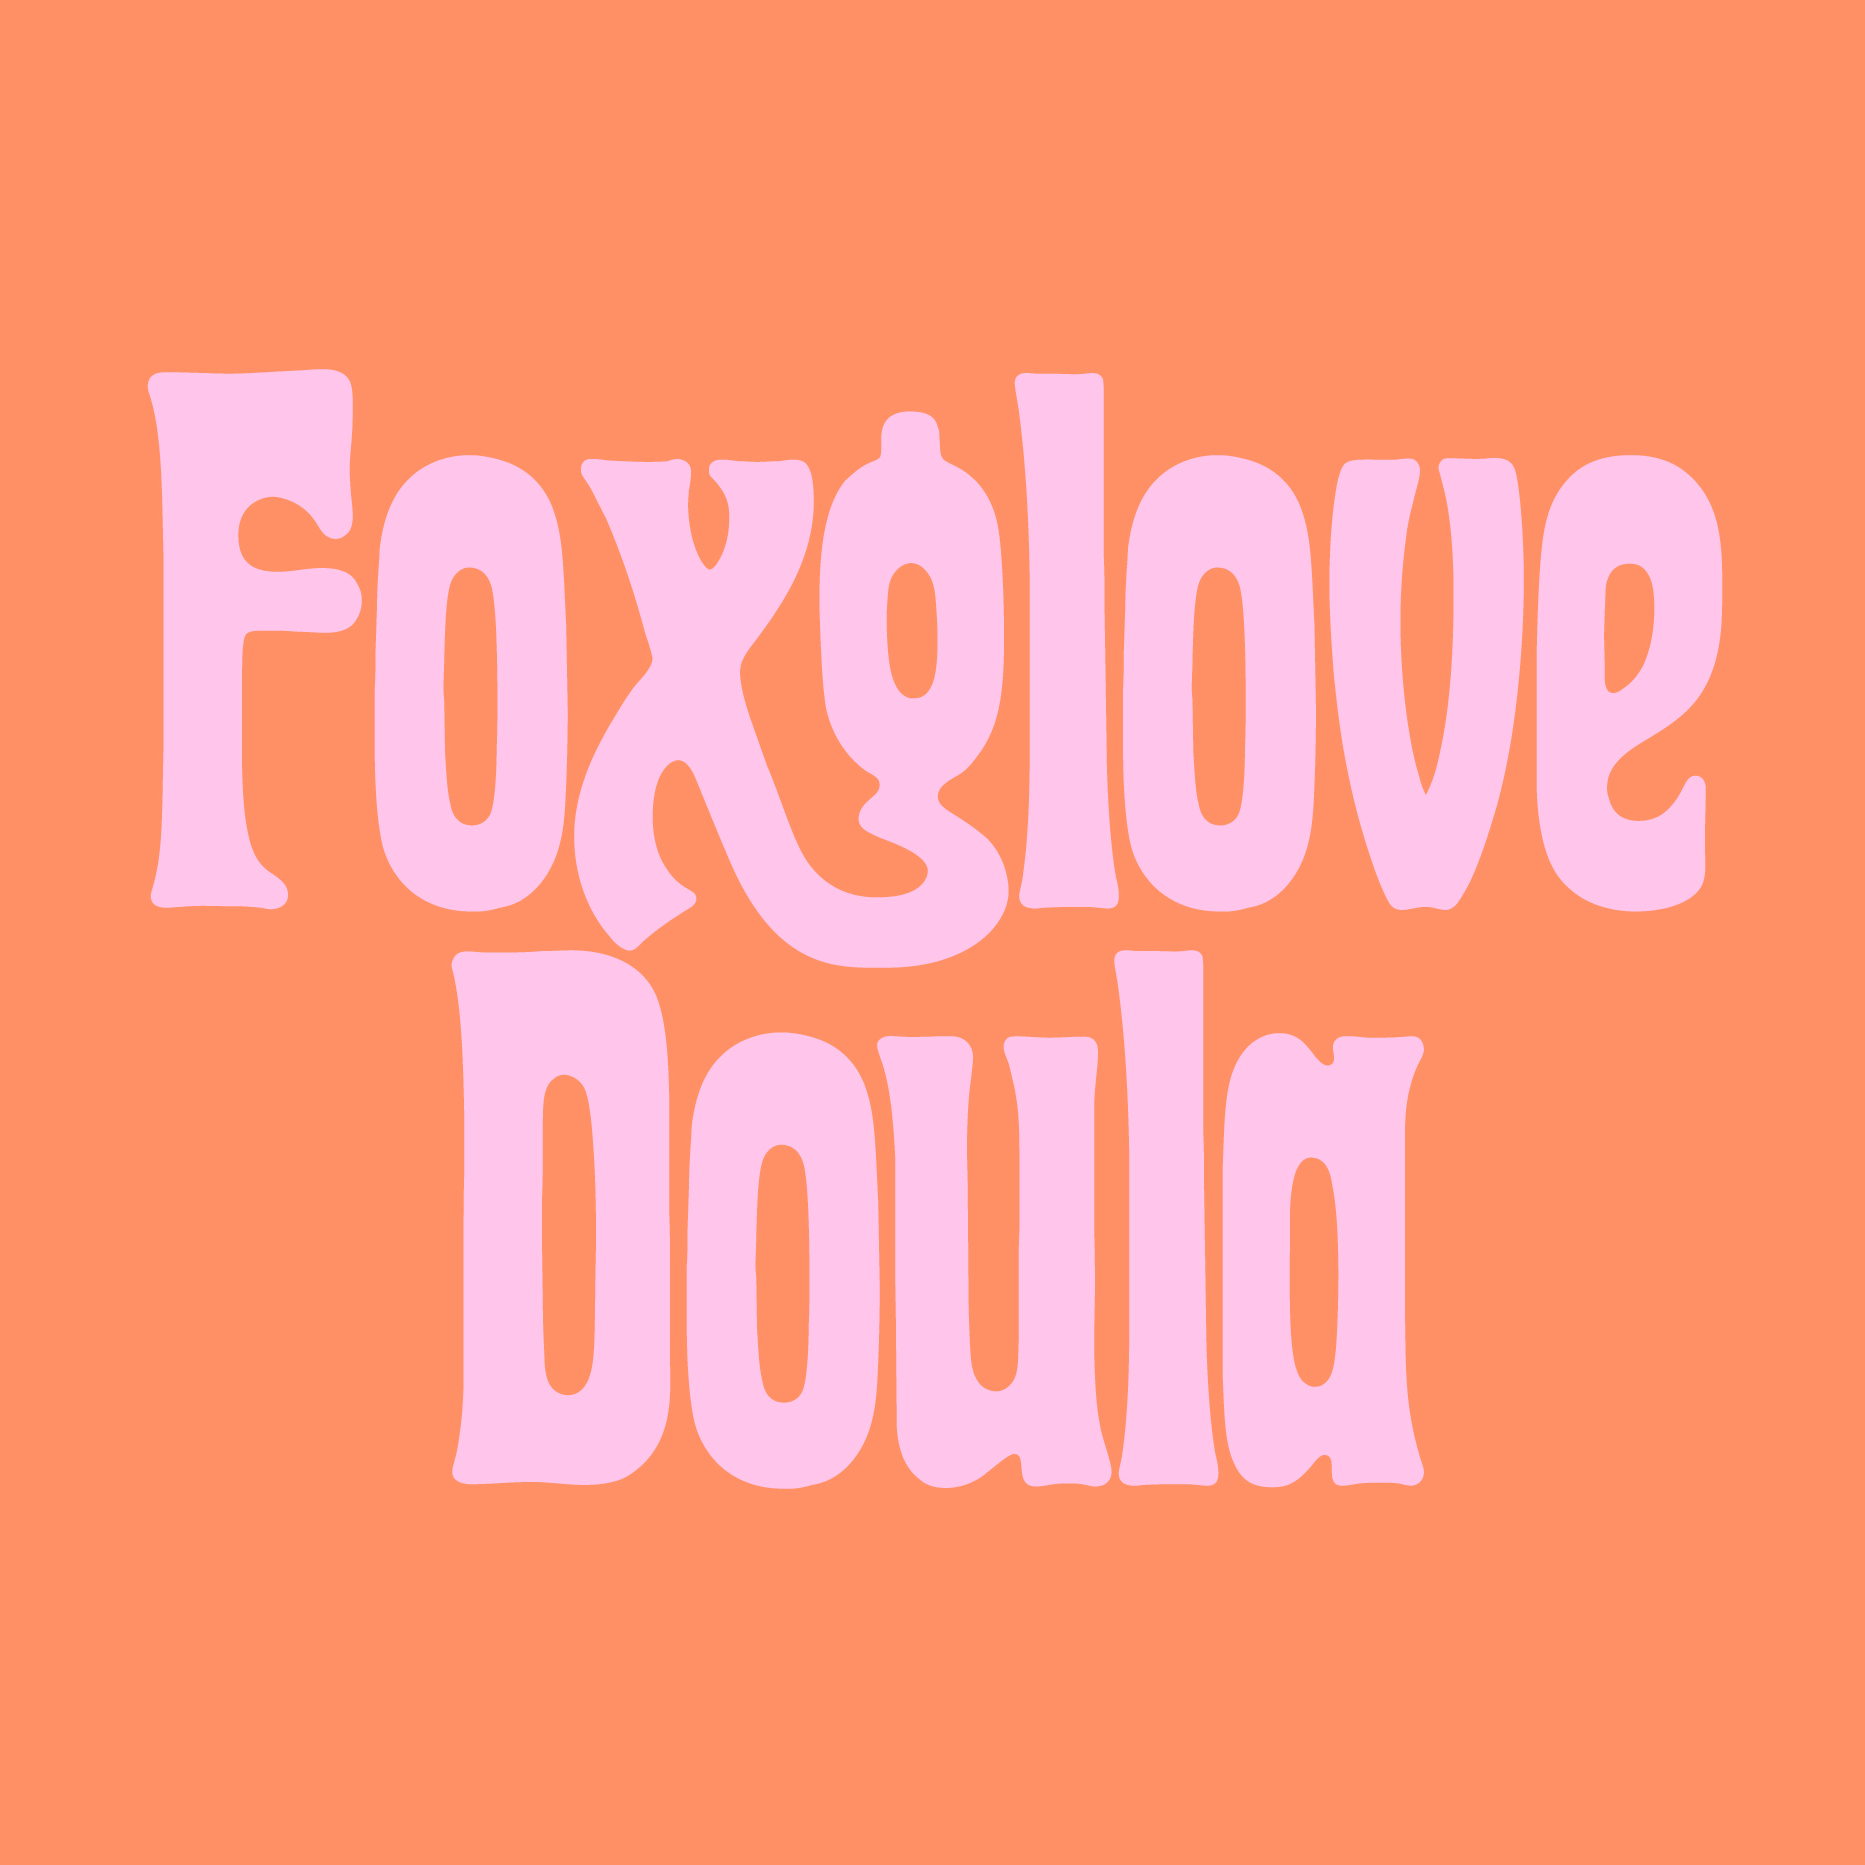 Foxglove Doula identity